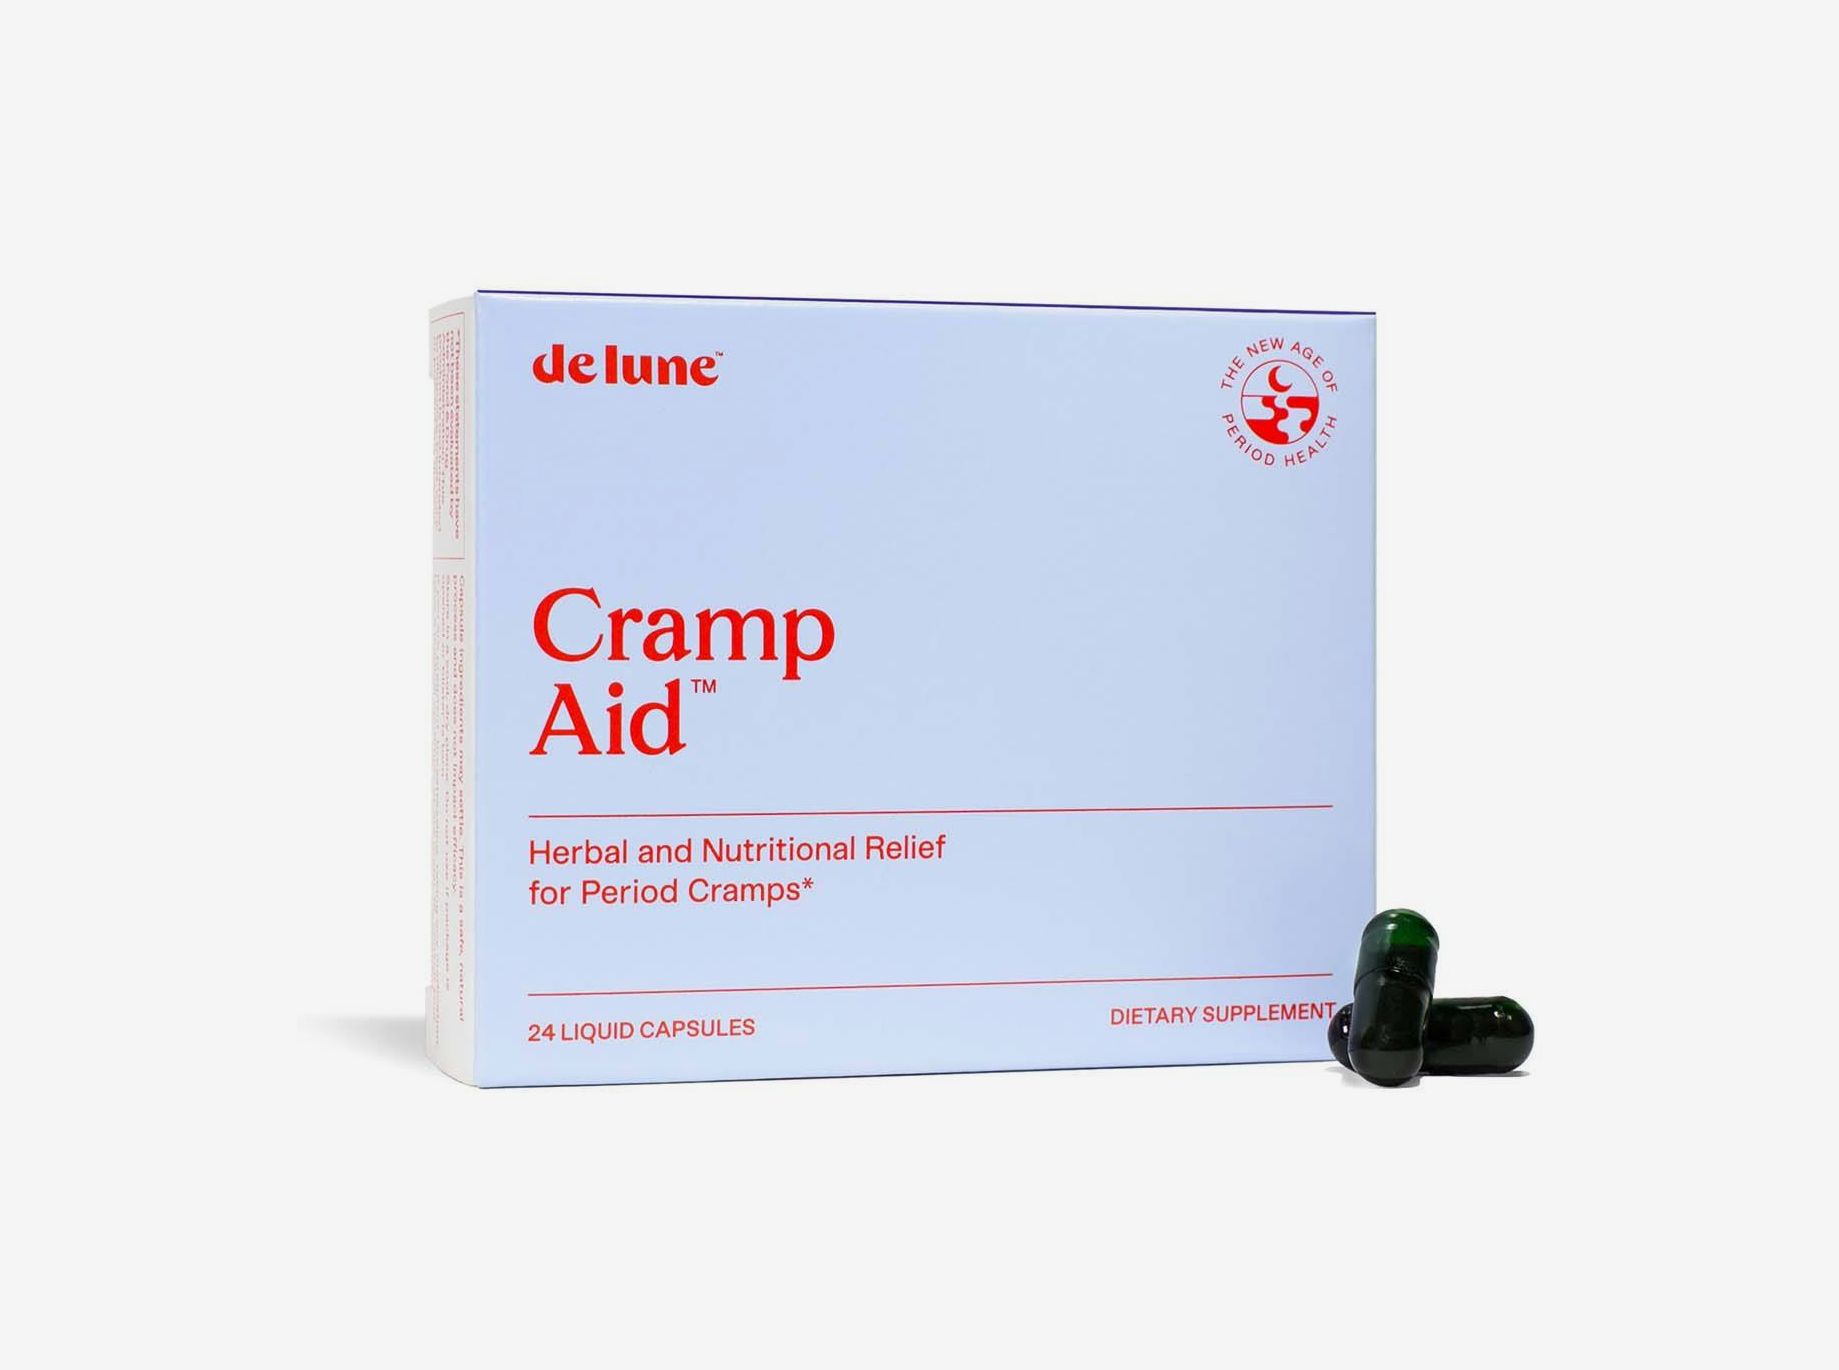 Medicine for Cramps — Period Cramp Remedies